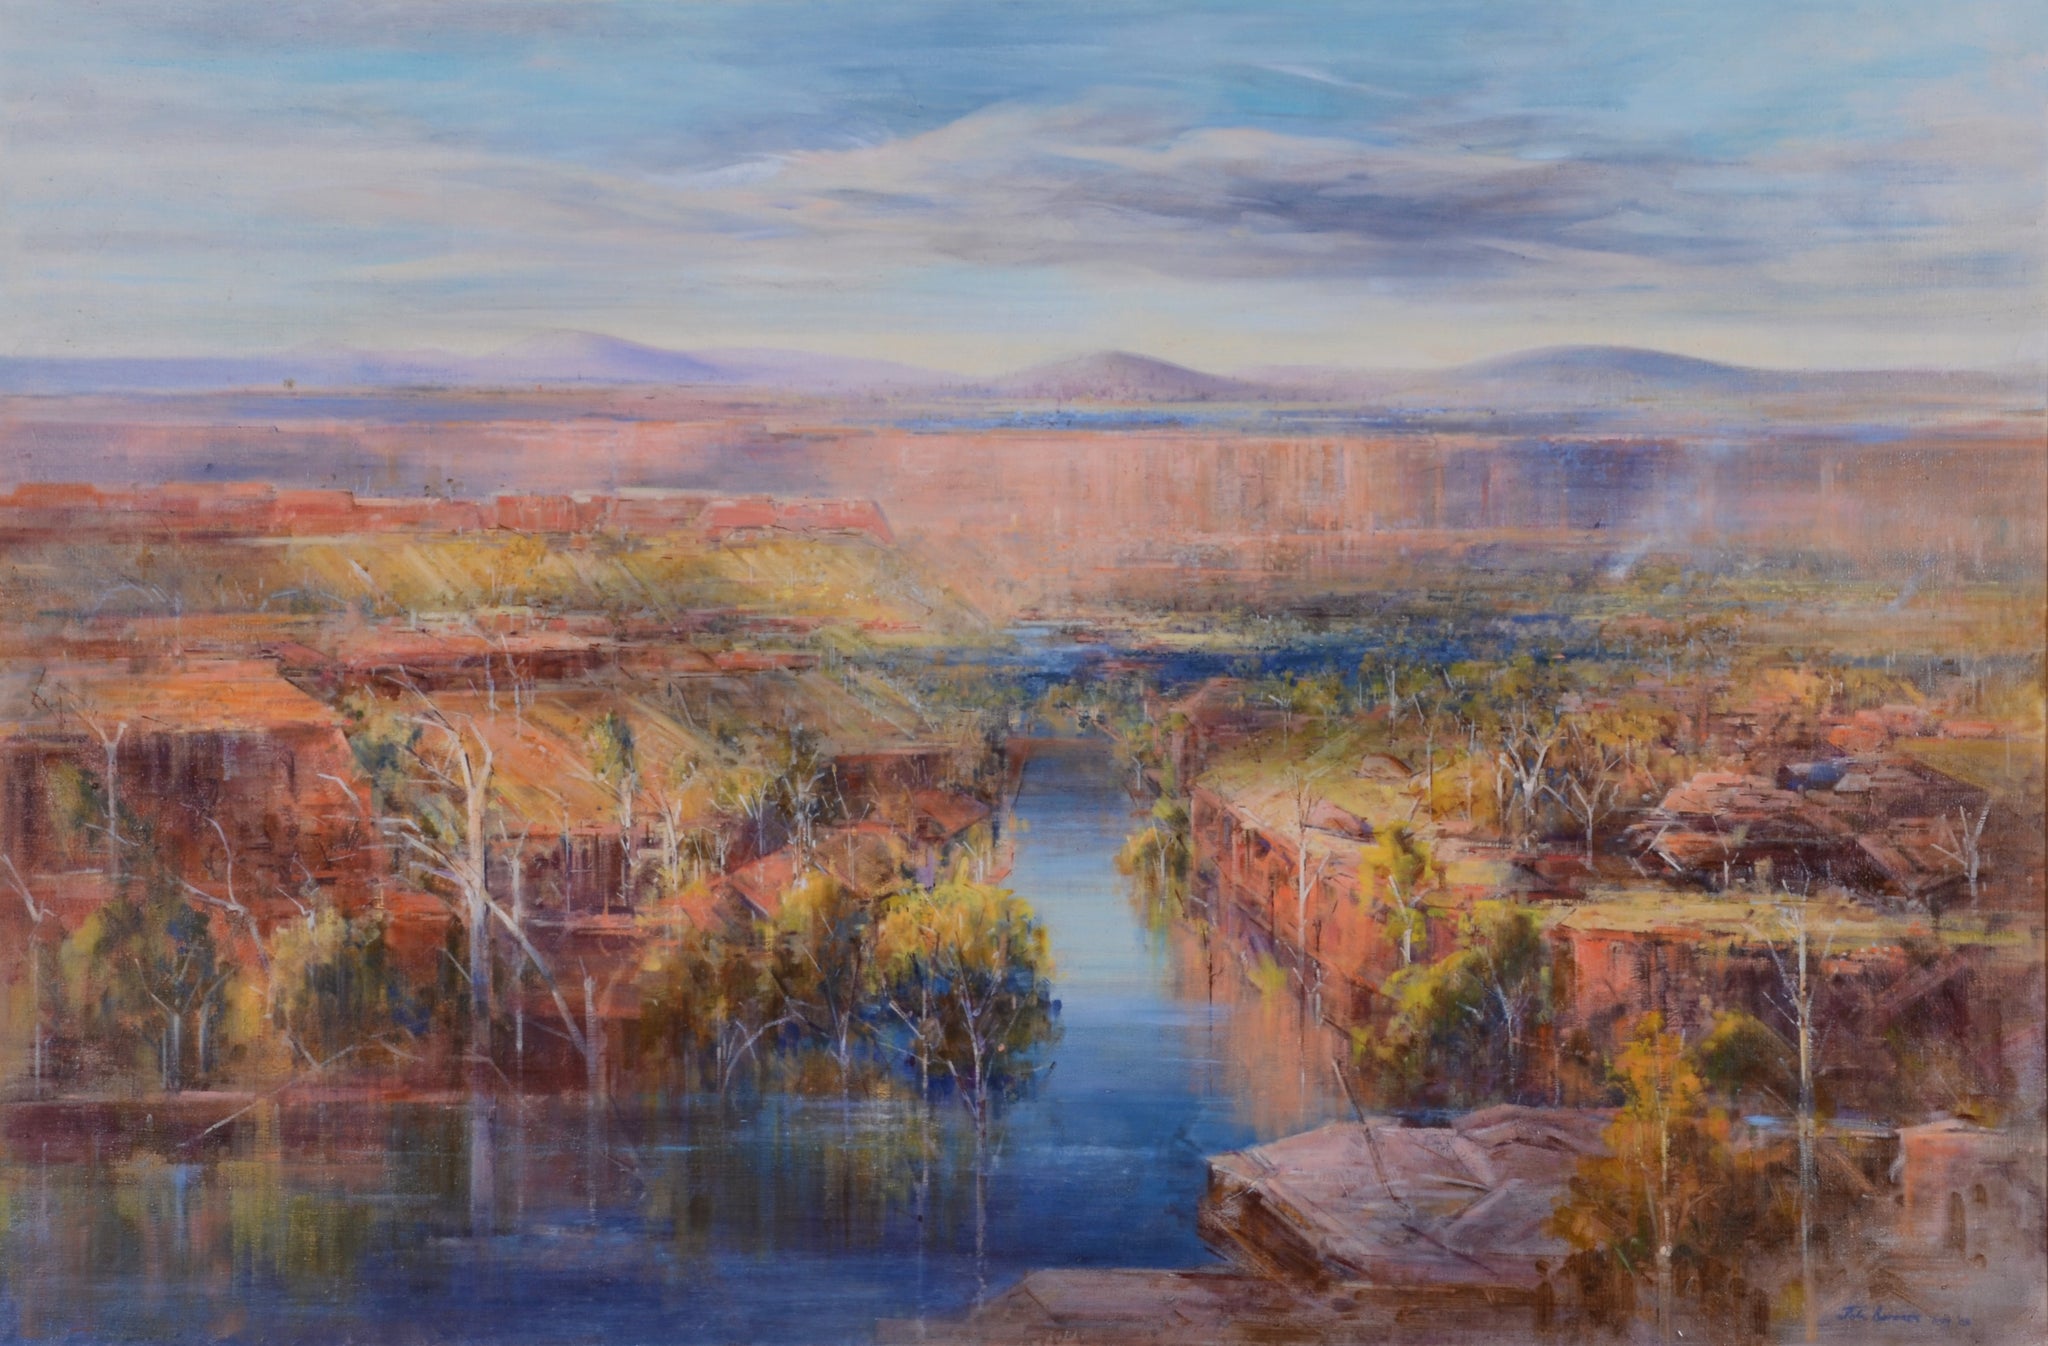 Gorge, Hammersley Ranges, 2008, Oil on Canvas, 122 x 183 cm